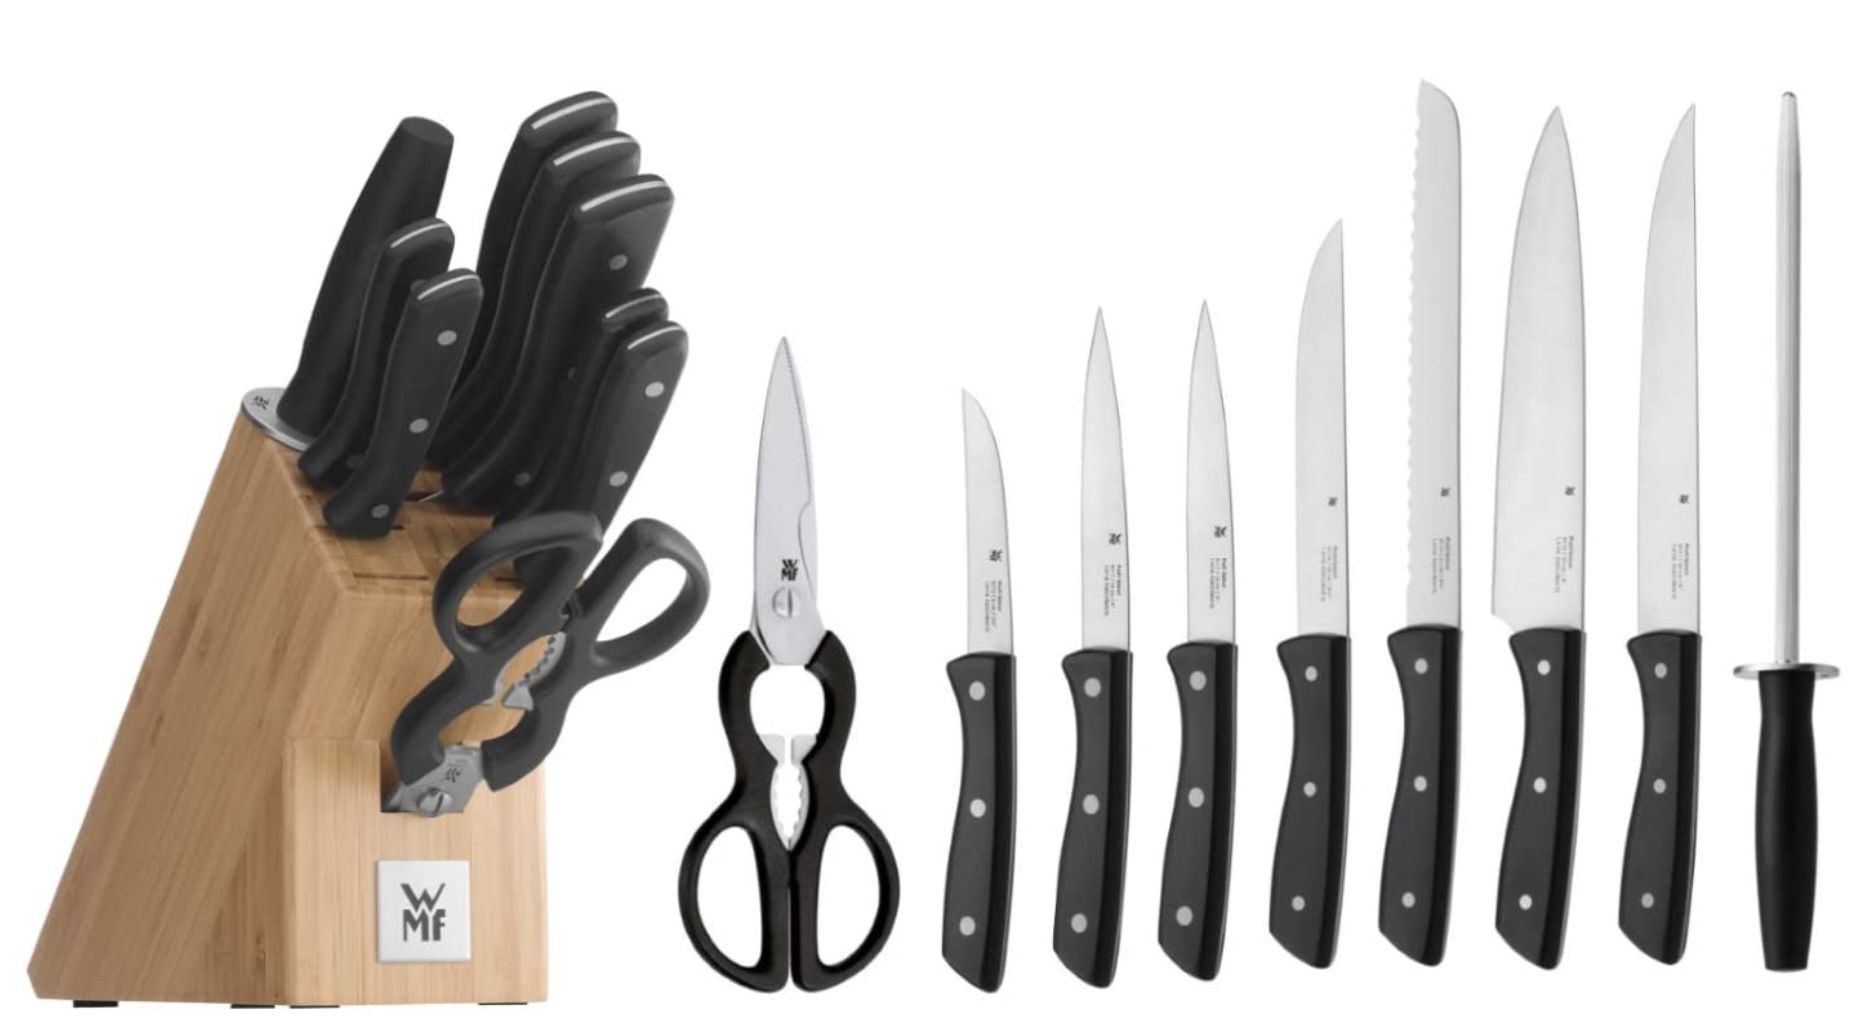 WMF Messerblock Profi Select mit 10 teiligem Messerset für 89,99€ (statt 120€)